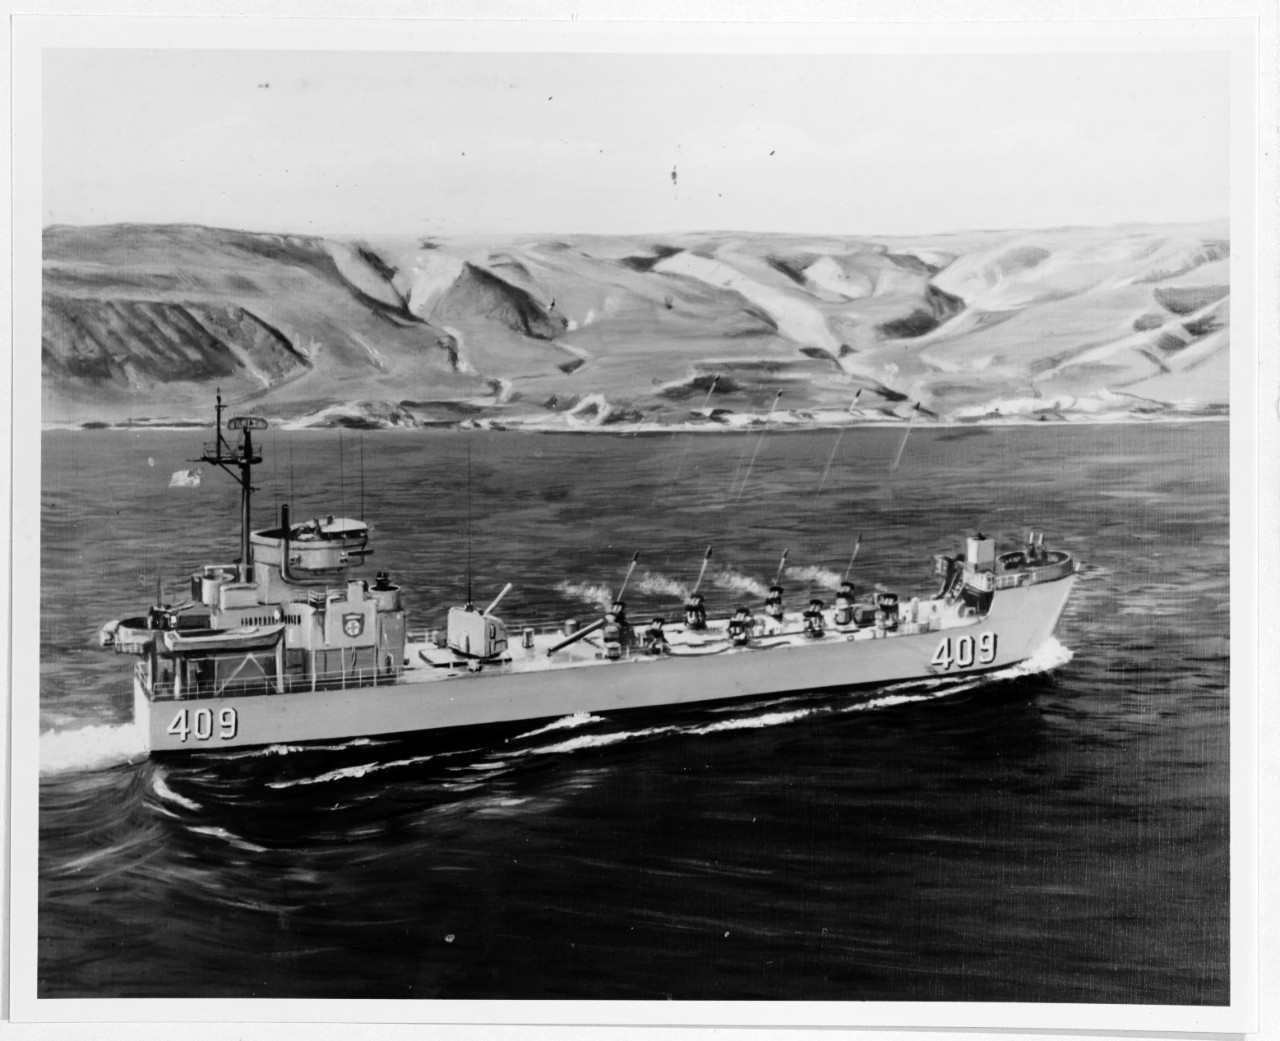 USS CLARION RIVER (LFR-409)